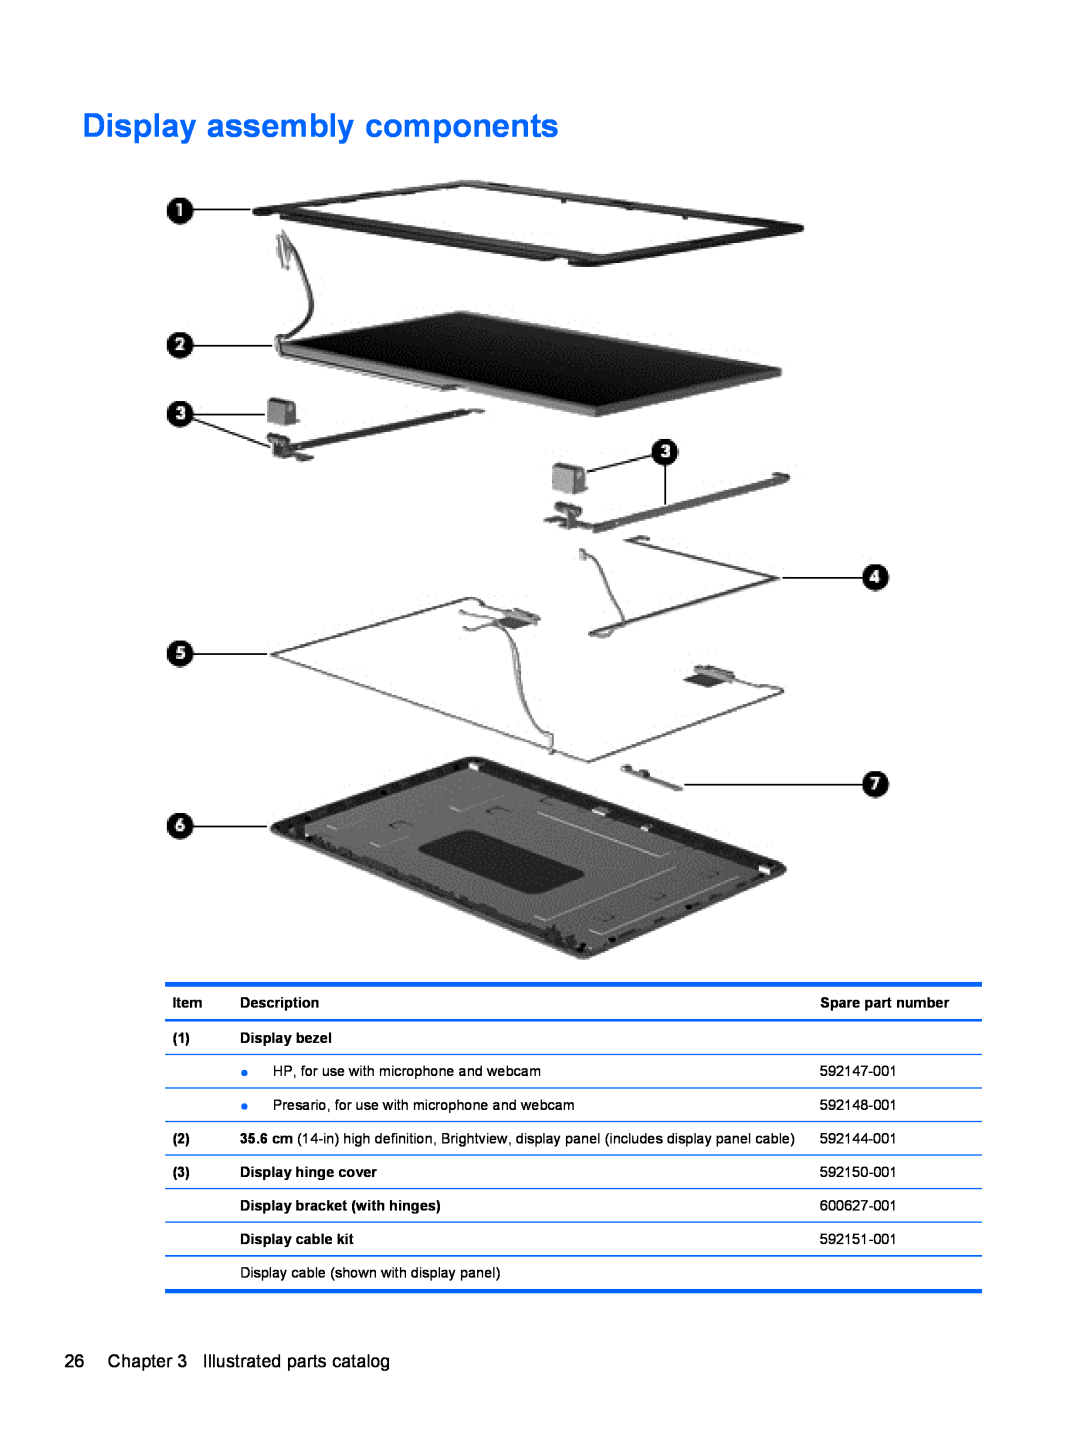 Compaq CQ42 manual Display assembly components, Illustrated parts catalog 